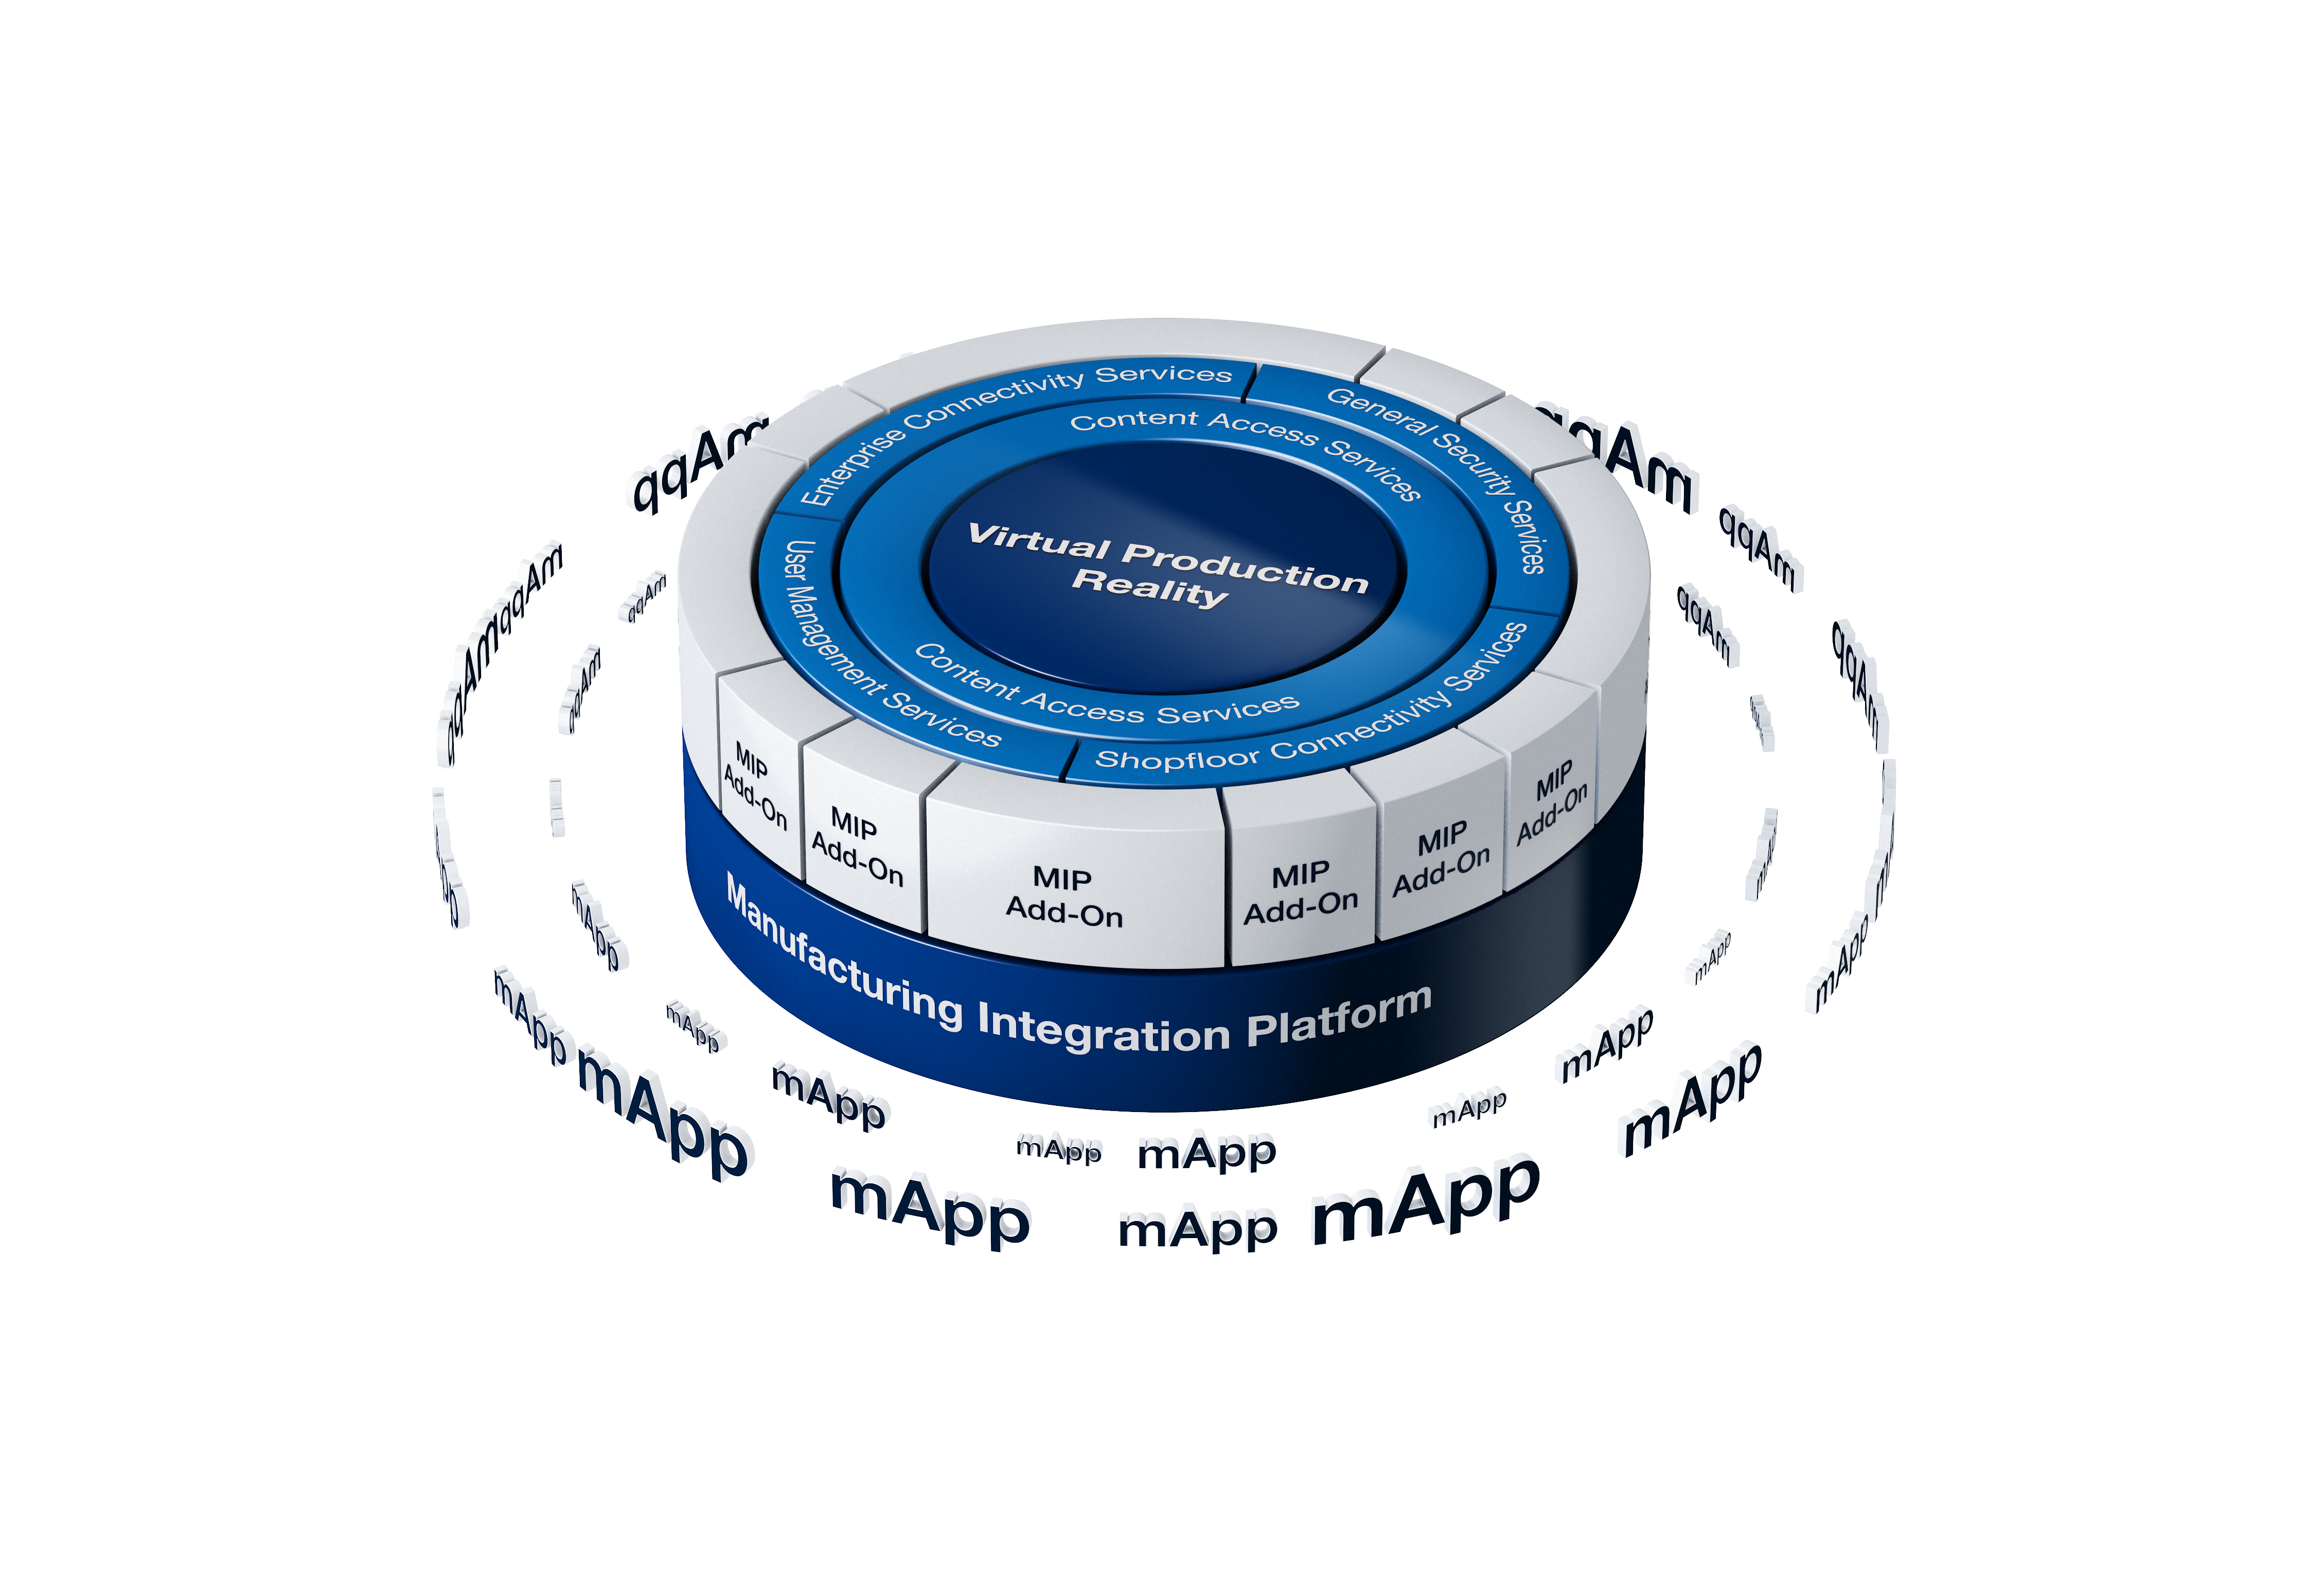 Die Integrationsplattform Manufacturing Integration Platform (MIP)